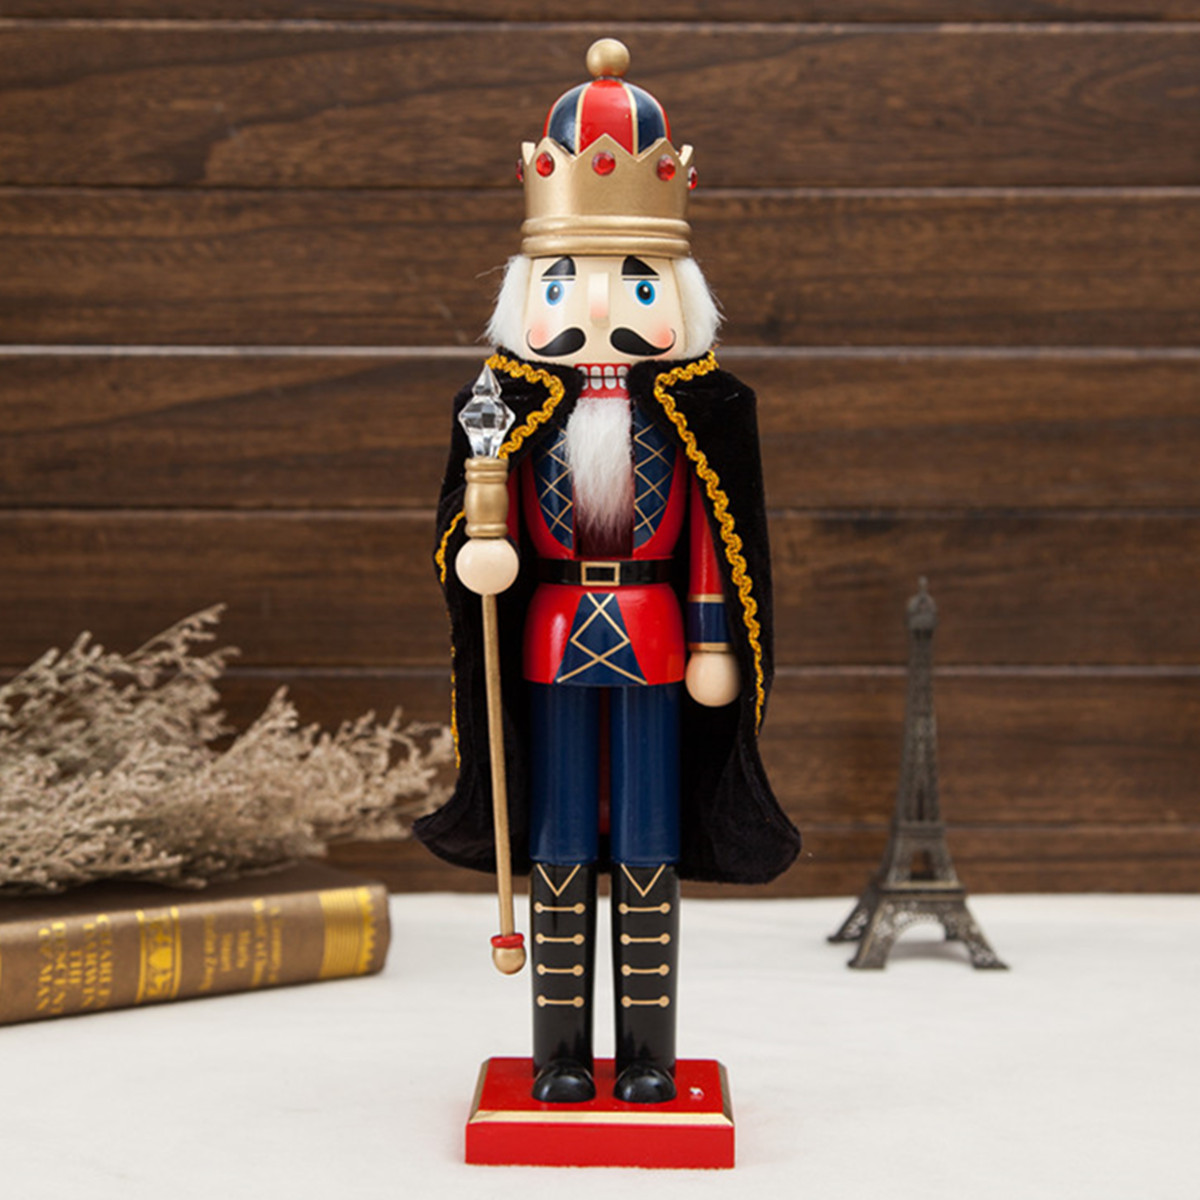 38cm-Wooden-Nutcracker-Doll-Soldier-Vintage-Handcraft-Decoration-Christmas-Gifts-1394894-10